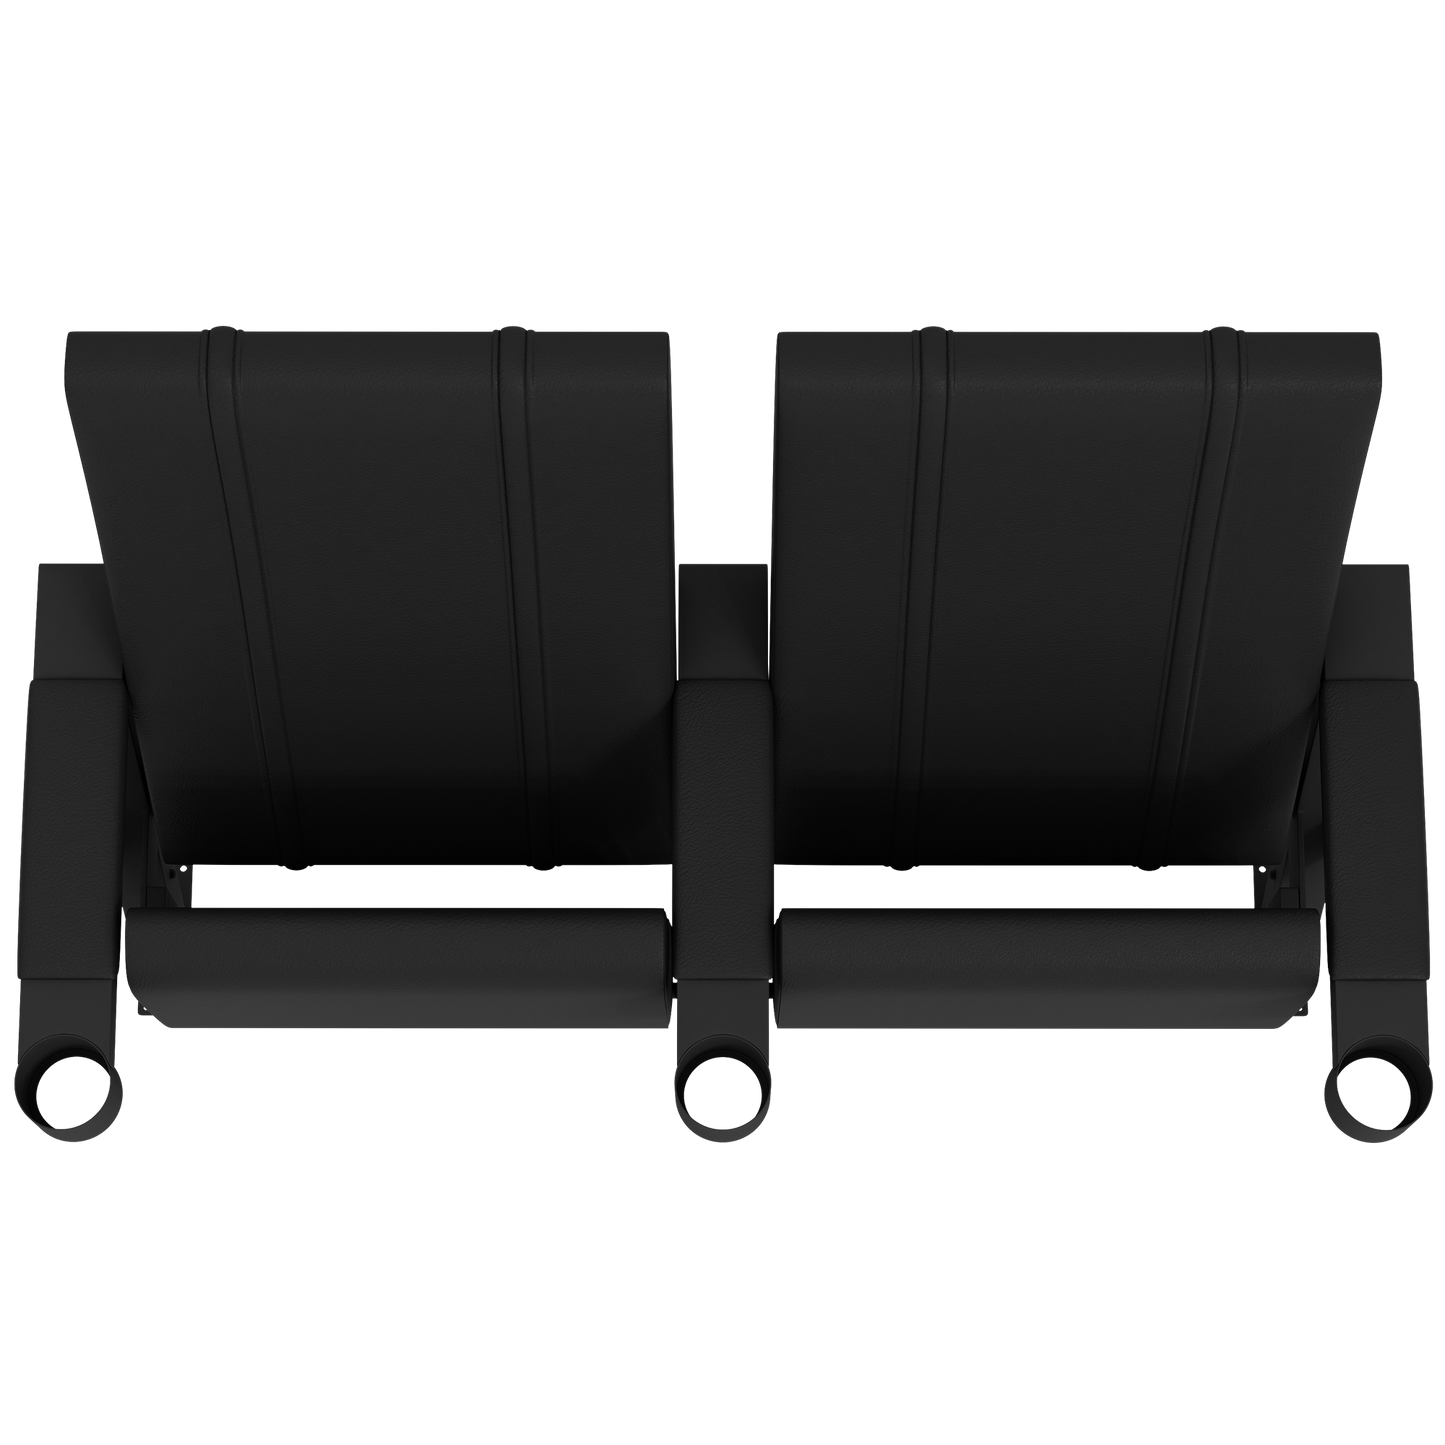 SuiteMax 3.5 VIP Seats with Washington Commanders Secondary Logo